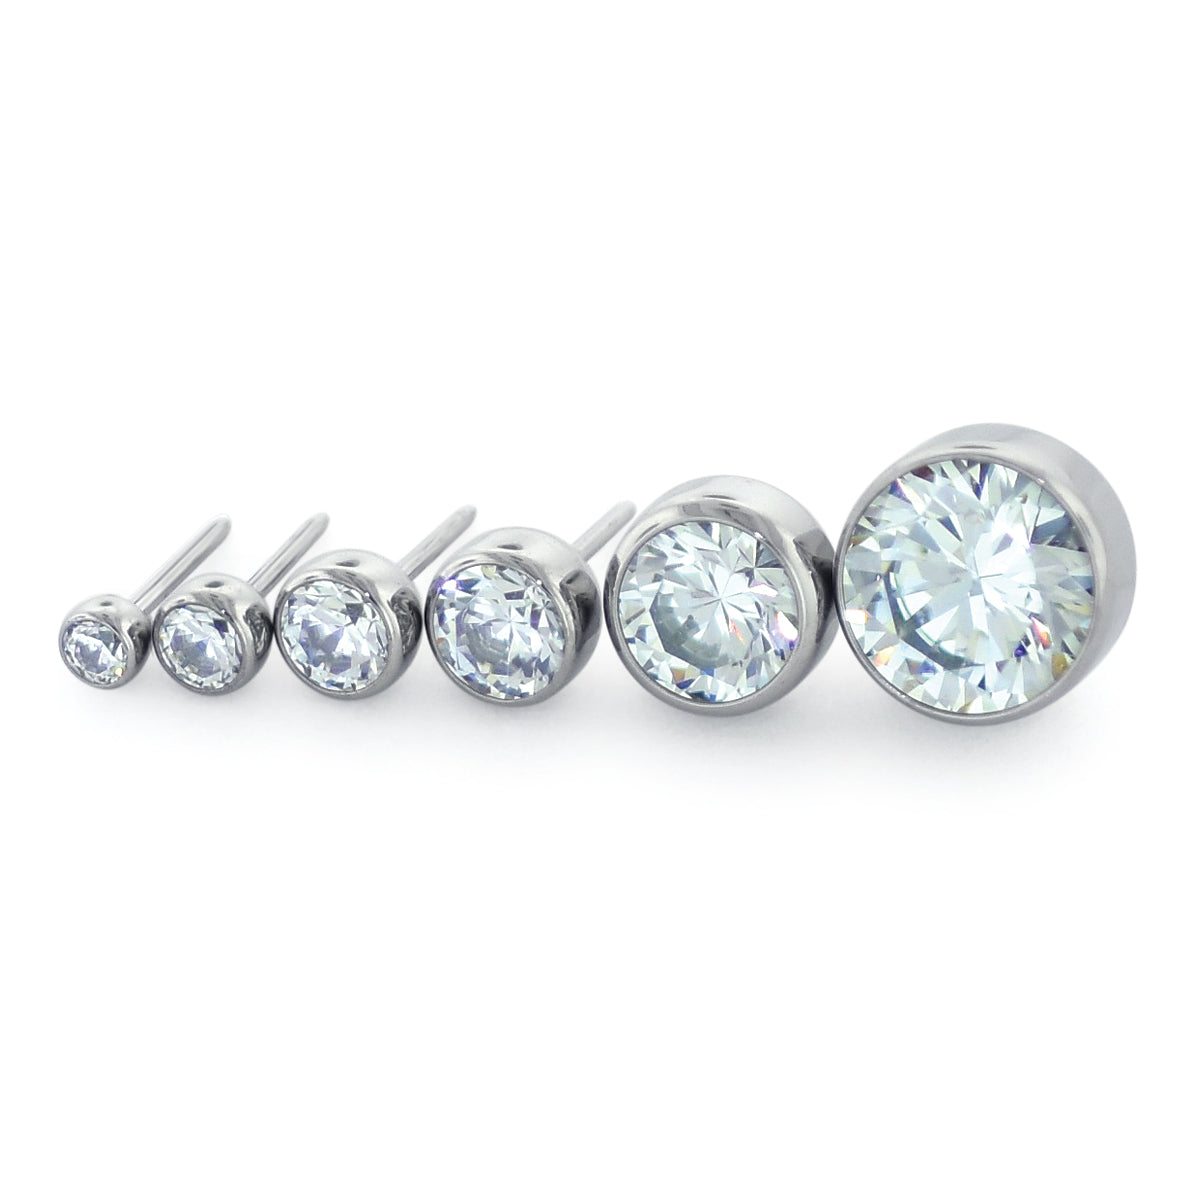 Six sizes of threadless titanium bezel set gem ends with cubic zirconia gems.